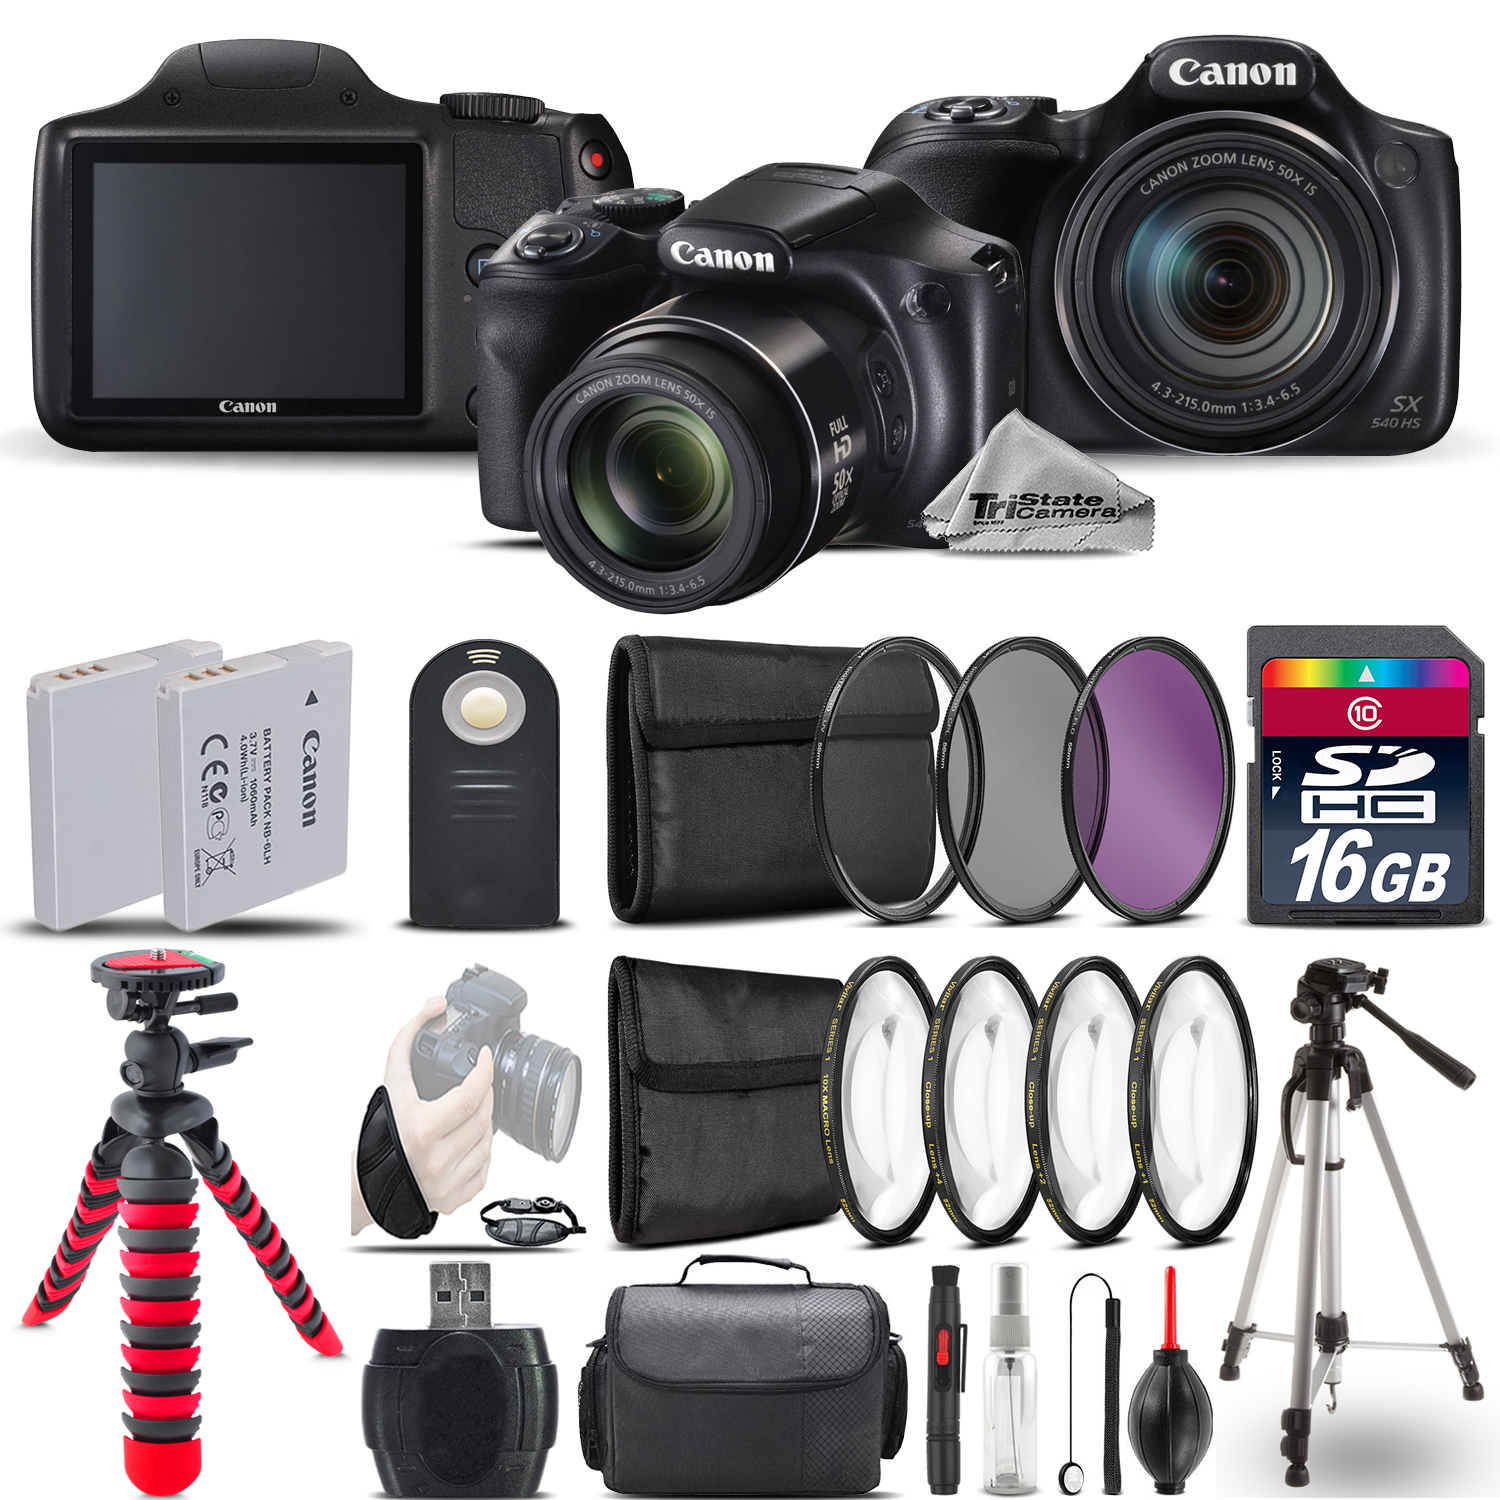 PowerShot SX540 HS Digital Camera + 2 x Tripod  + EXT BAT + Filter - 16GB *FREE SHIPPING*